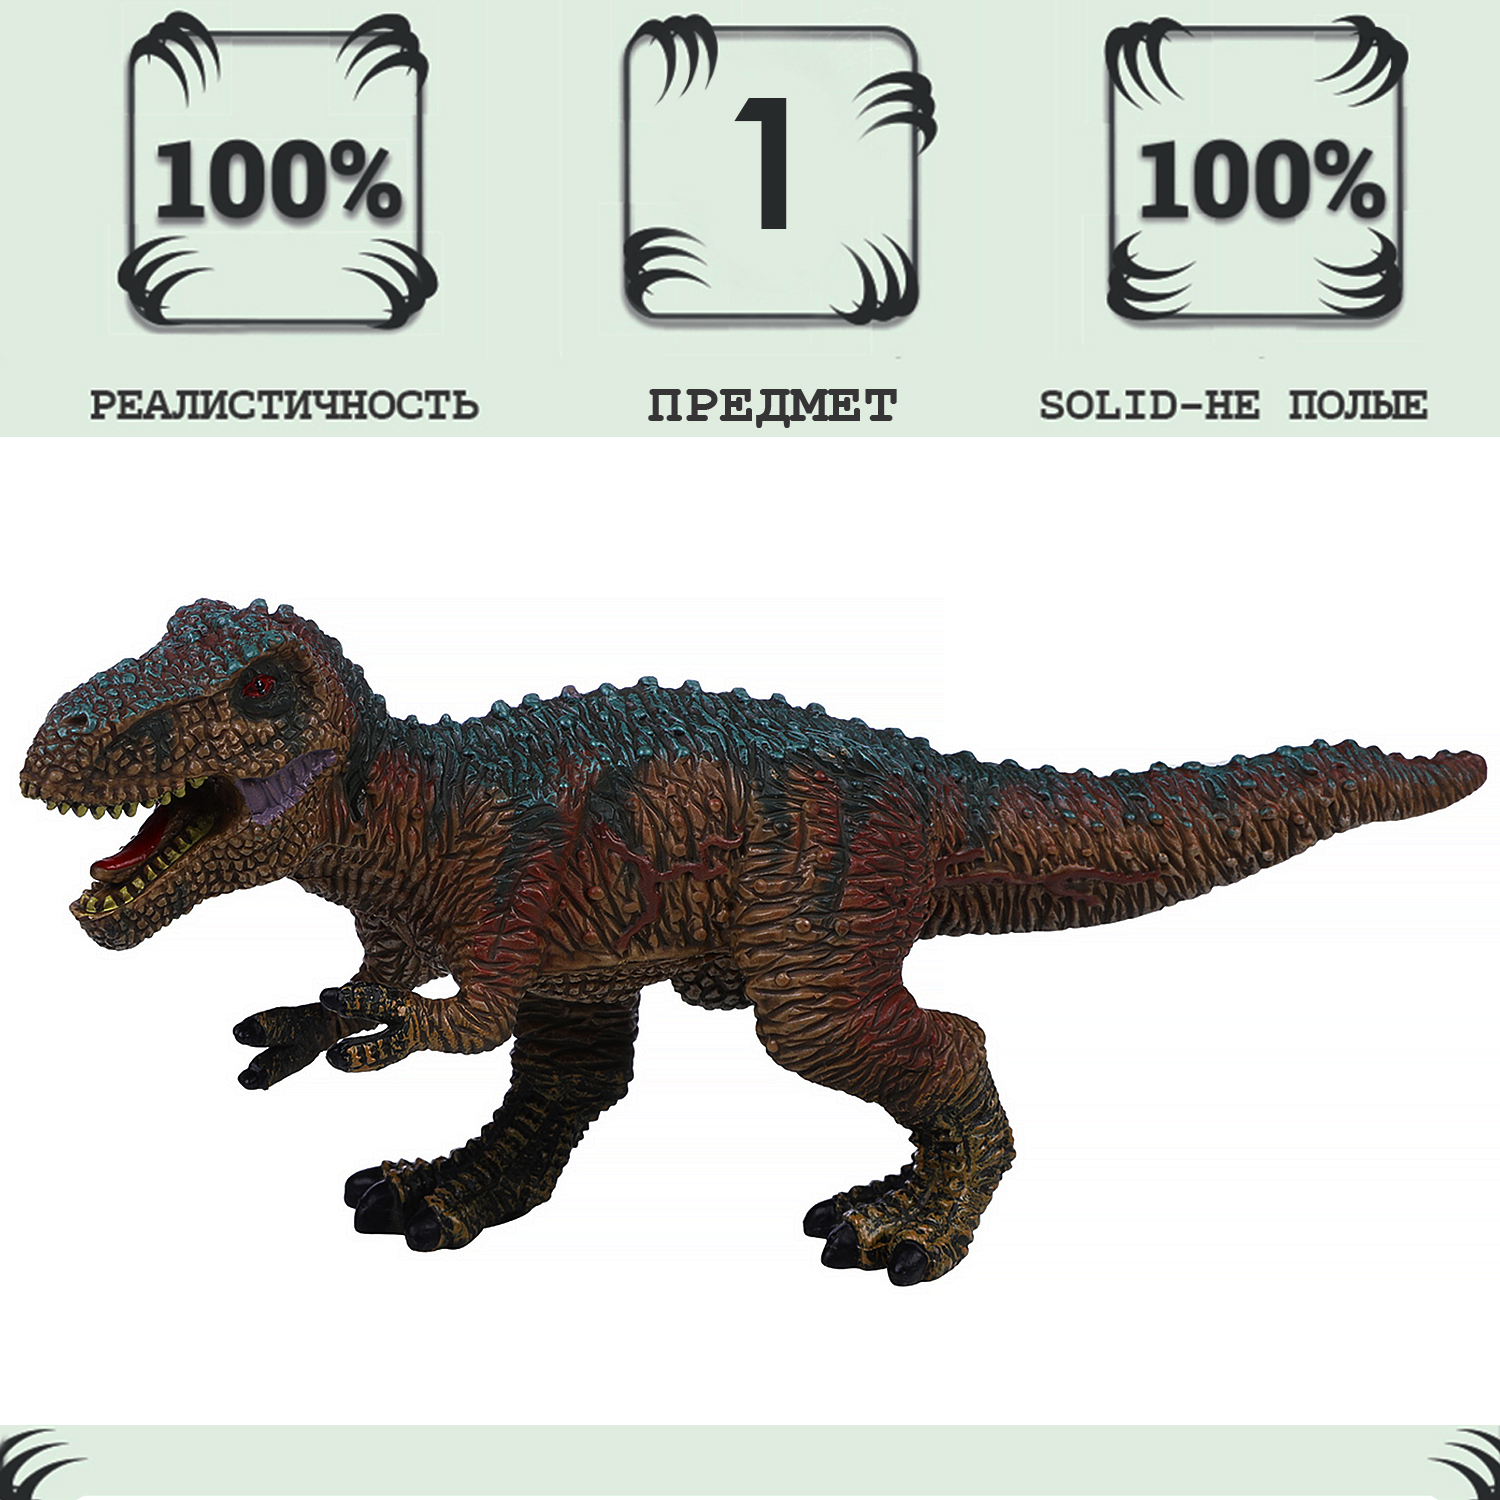 Фигурка Masai Mara динозавр серии Мир динозавров Тираннозавр Рекс MM216-049 игрушка динозавр серии мир динозавров masai mara трицератопс фигурка 30 см mm206 397